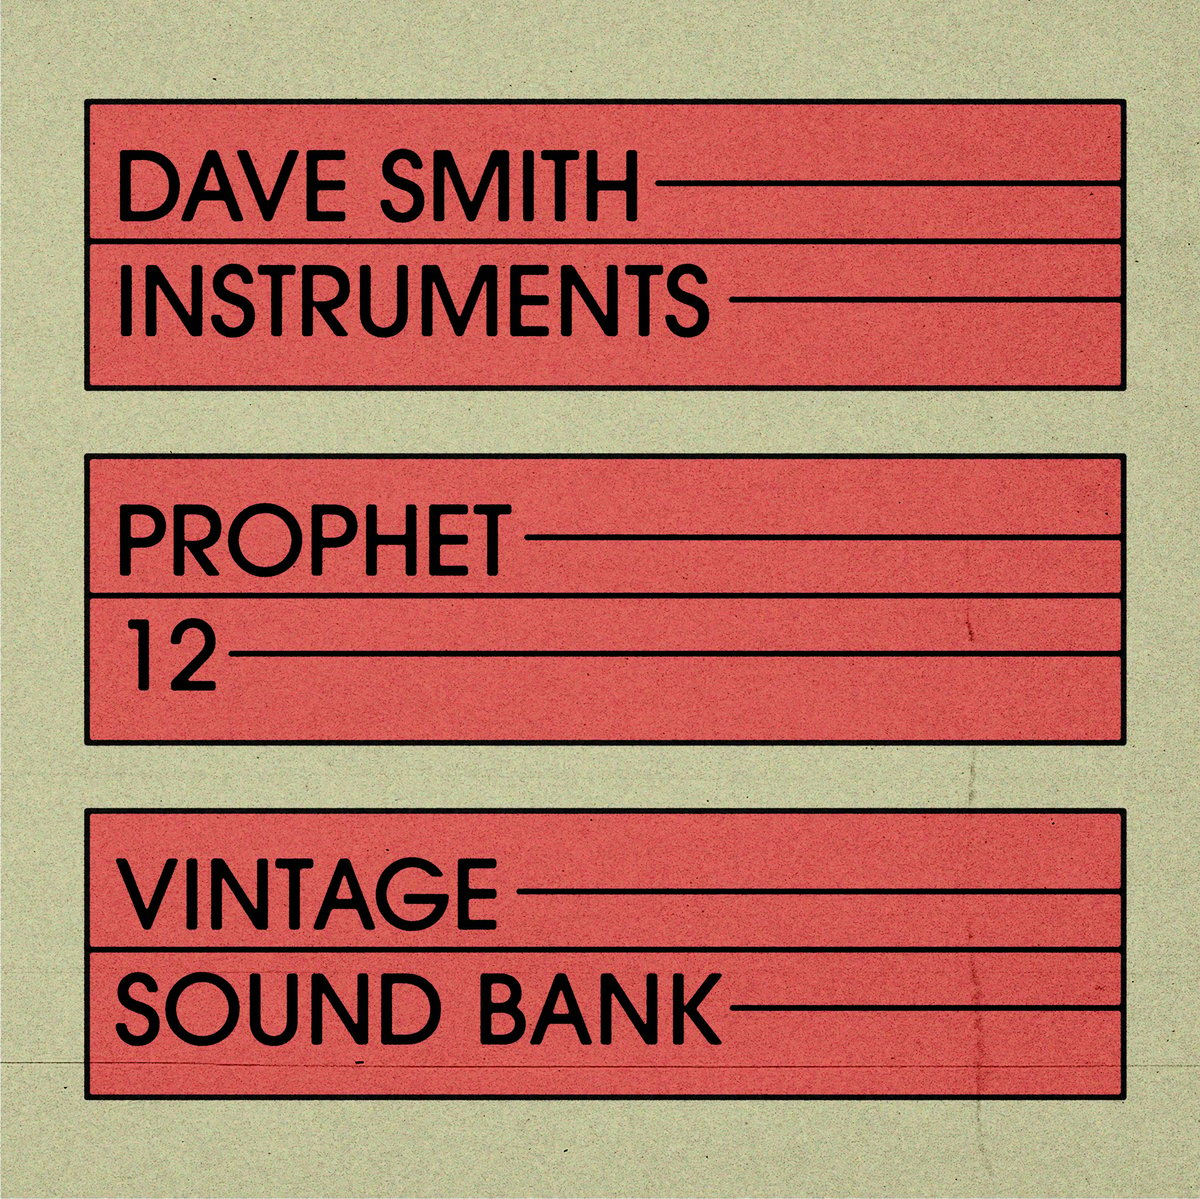 Image of DAVE SMITH INSTRUMENTS PROPHET-12 VINTAGE SOUND BANK